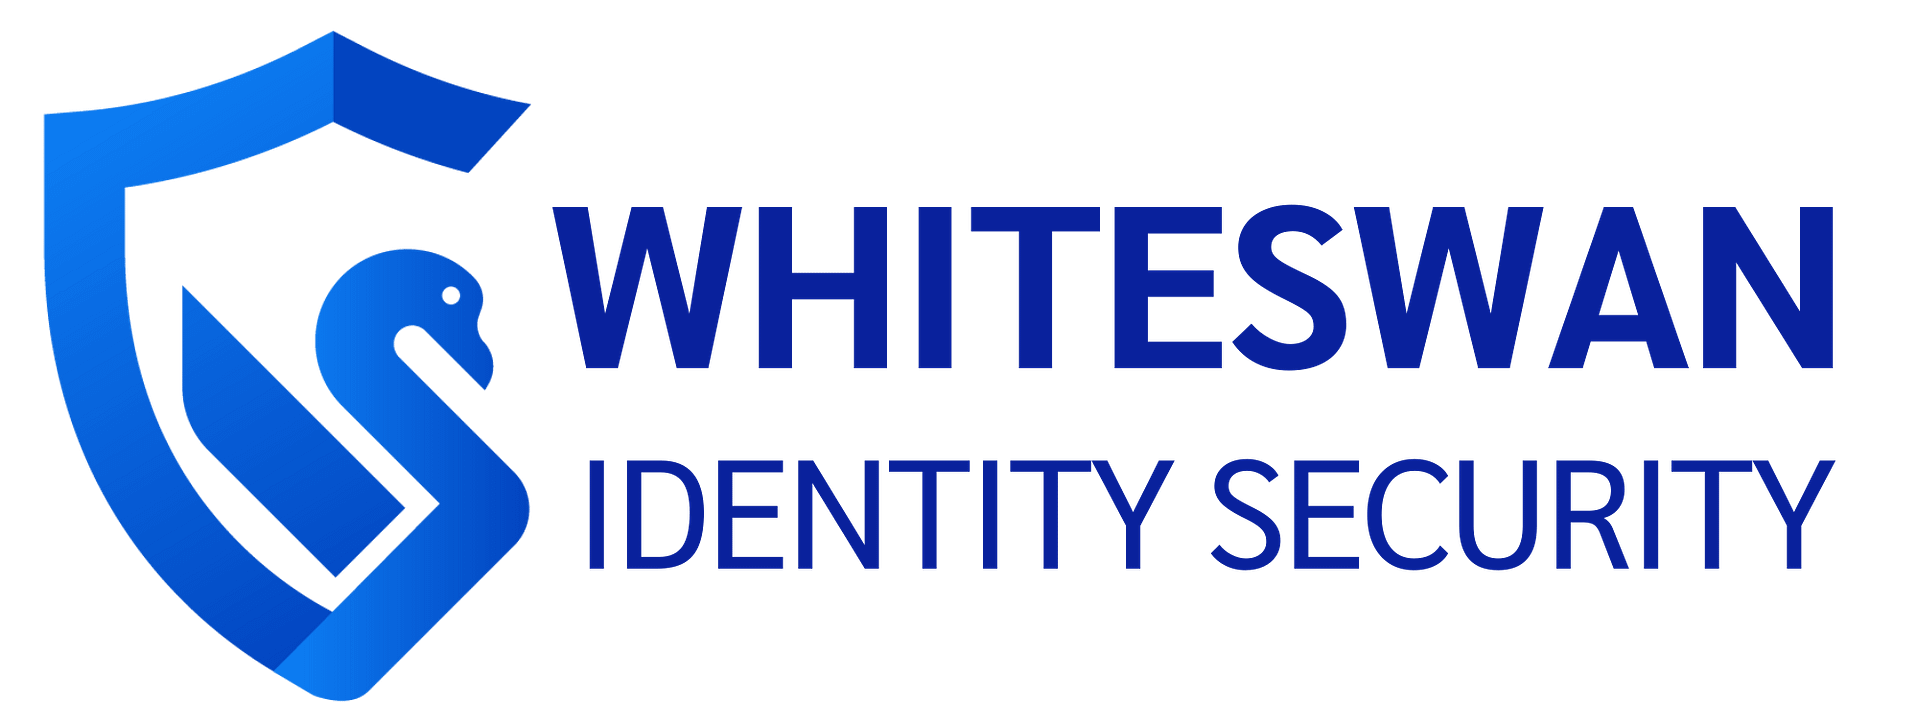 Whiteswan Identity Security